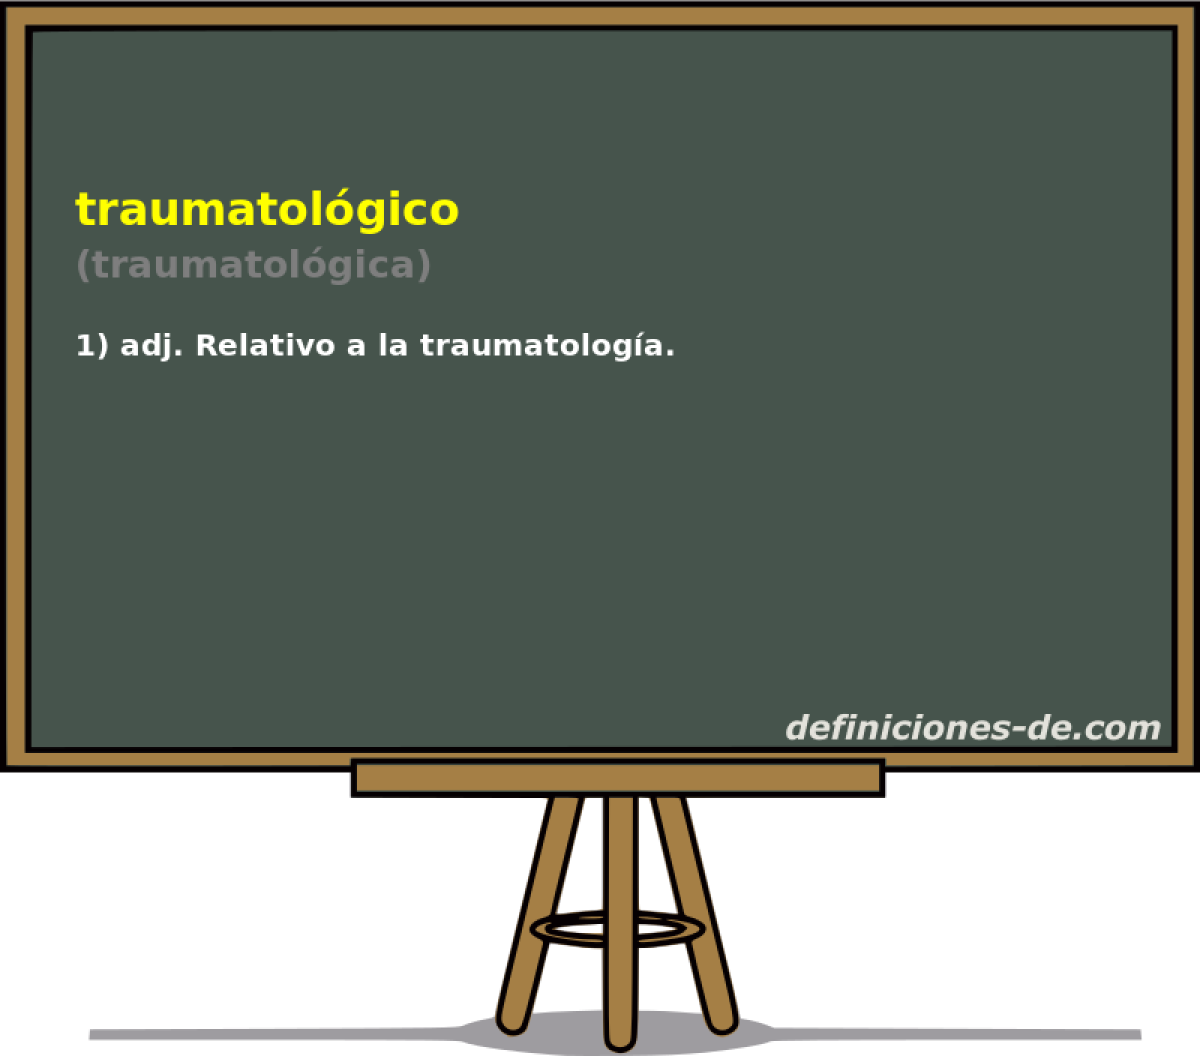 traumatolgico (traumatolgica)